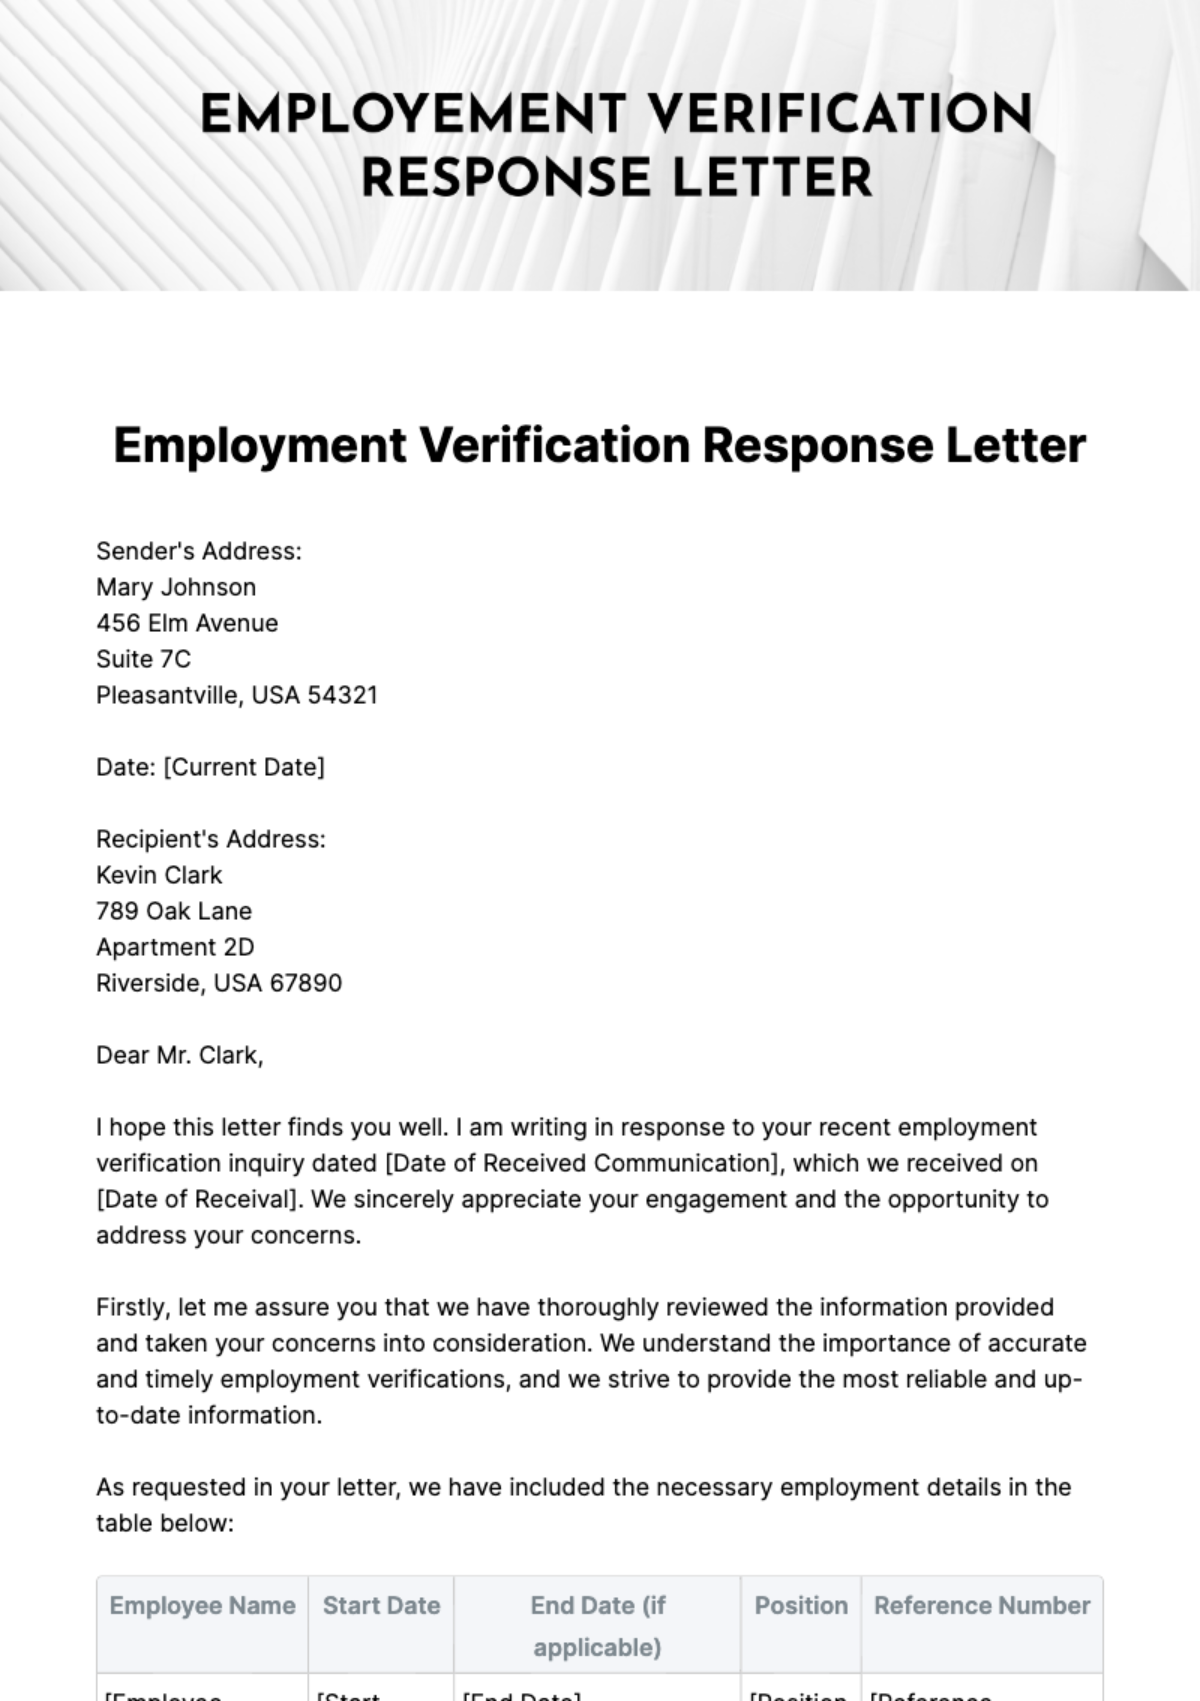 Free Employment Verification Response Letter Template